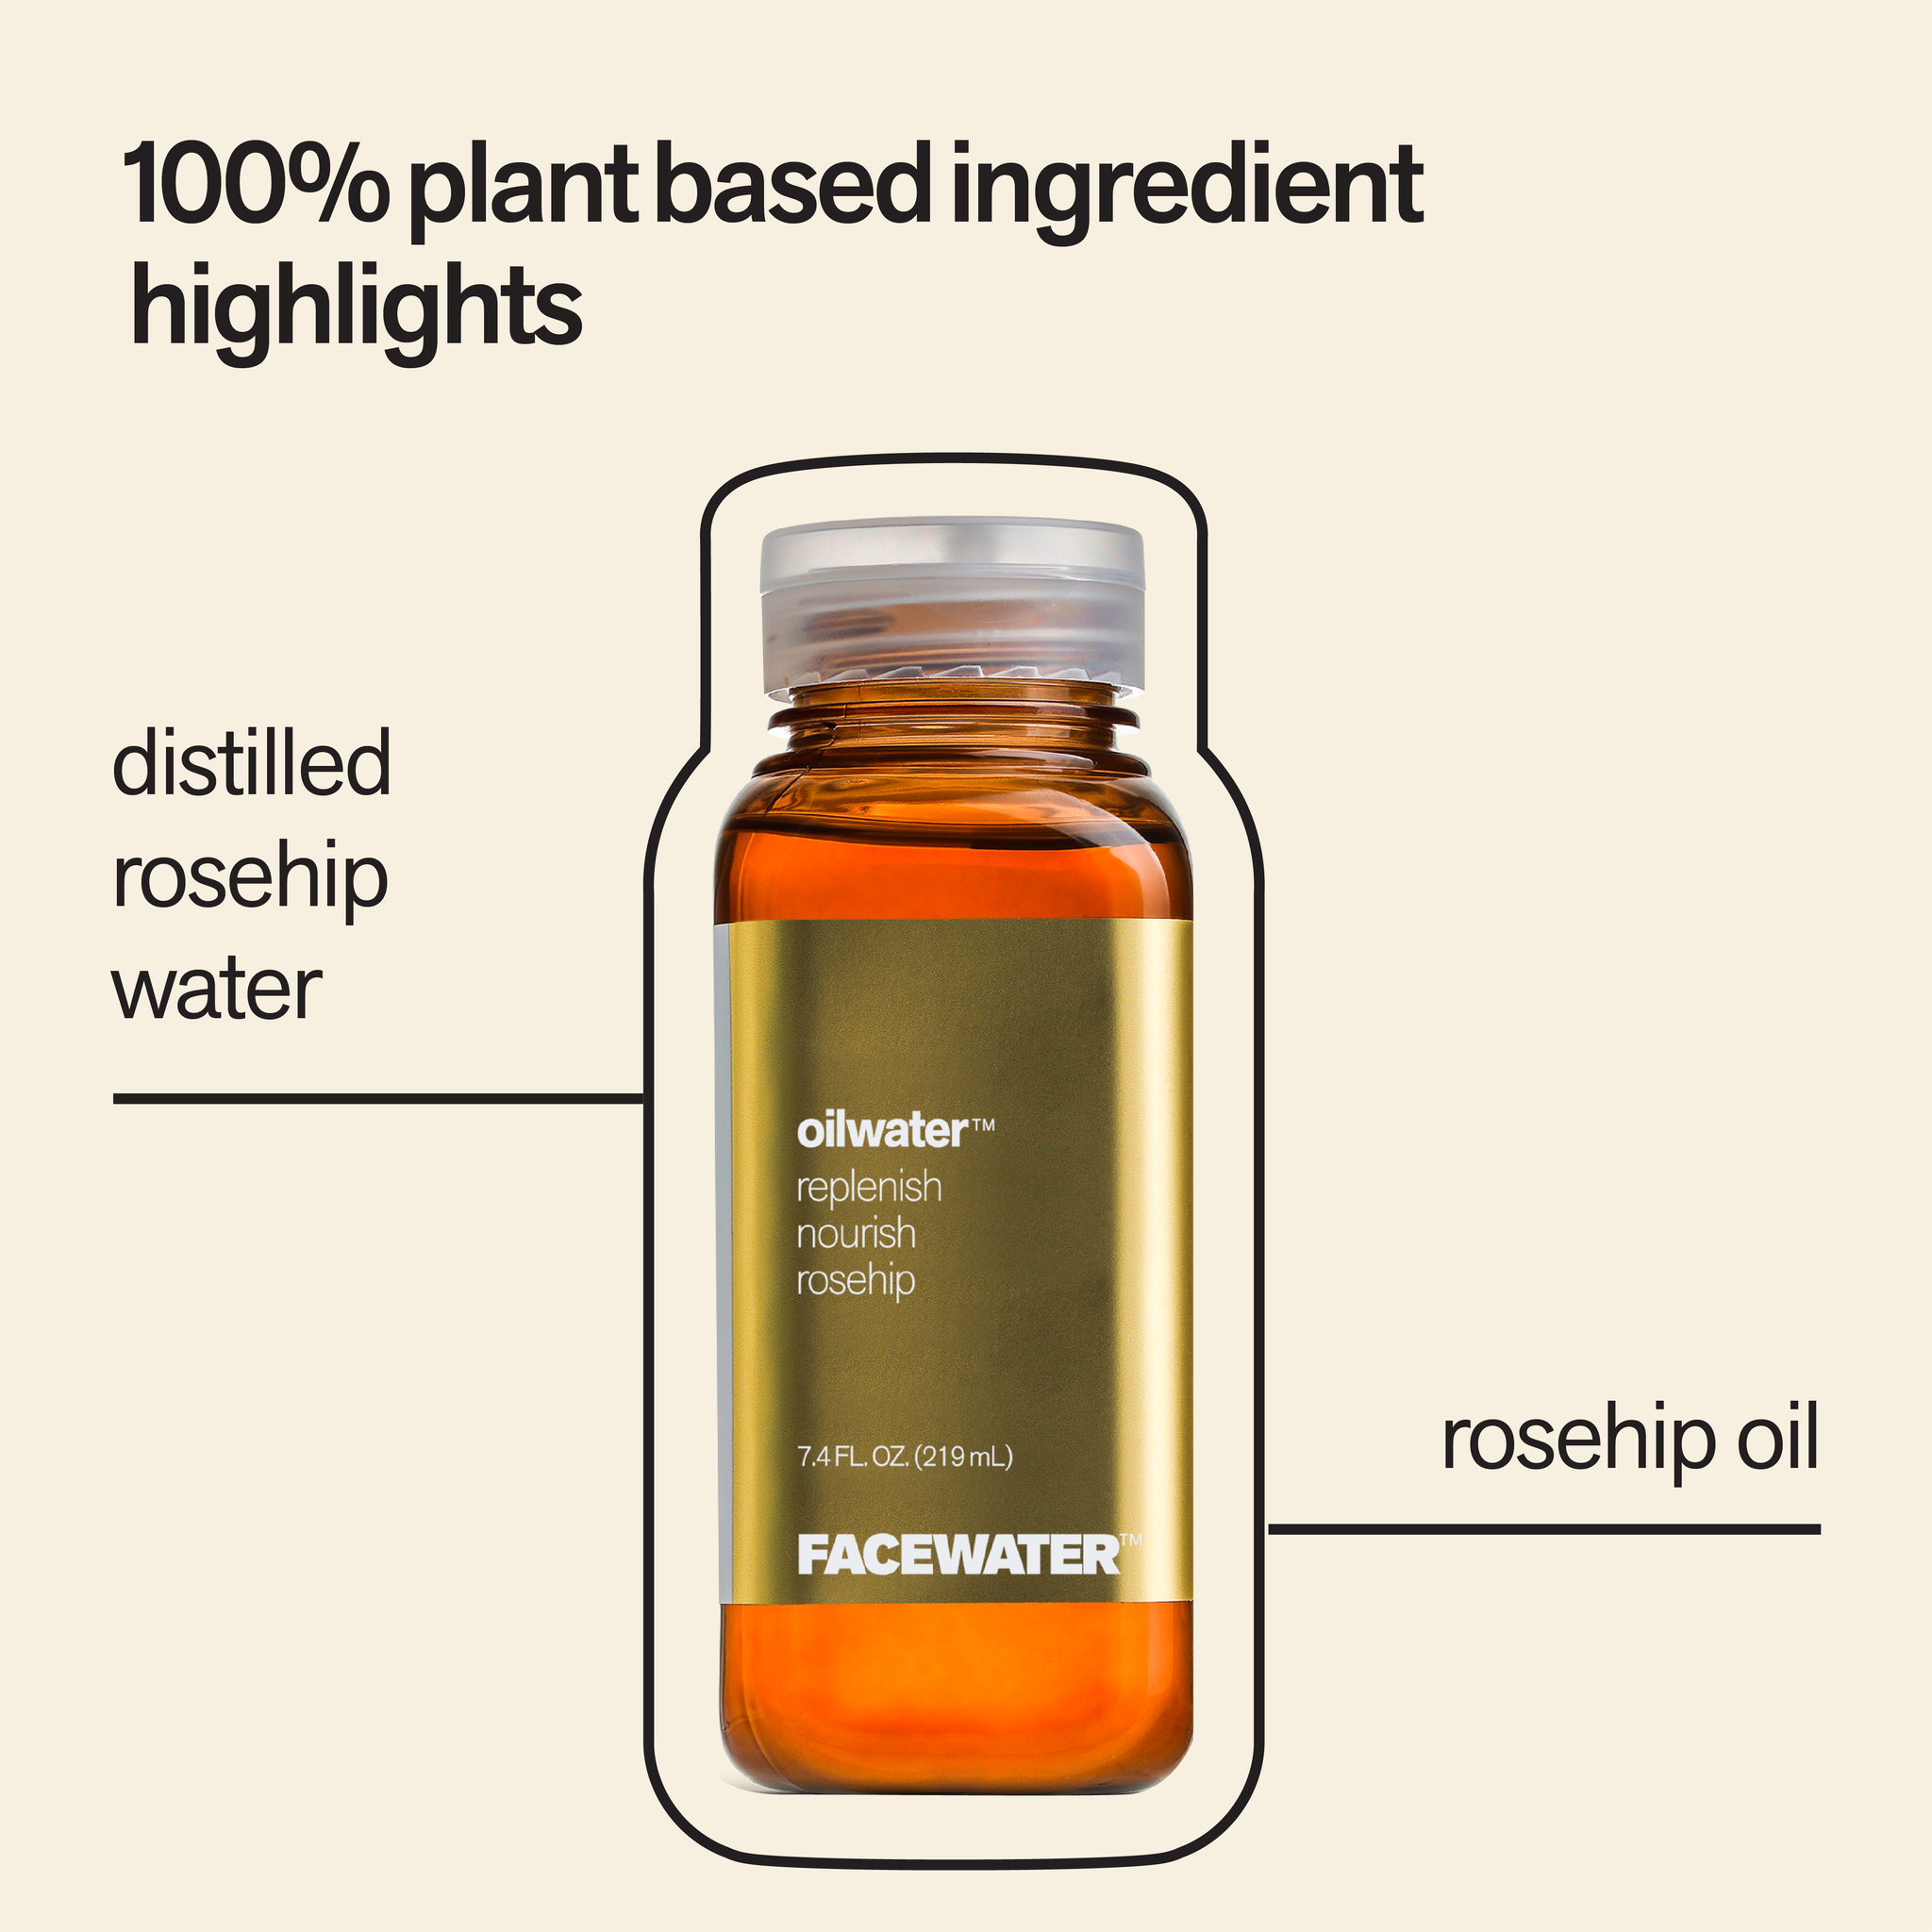 Oilwater Replenish Nourish Rosehip